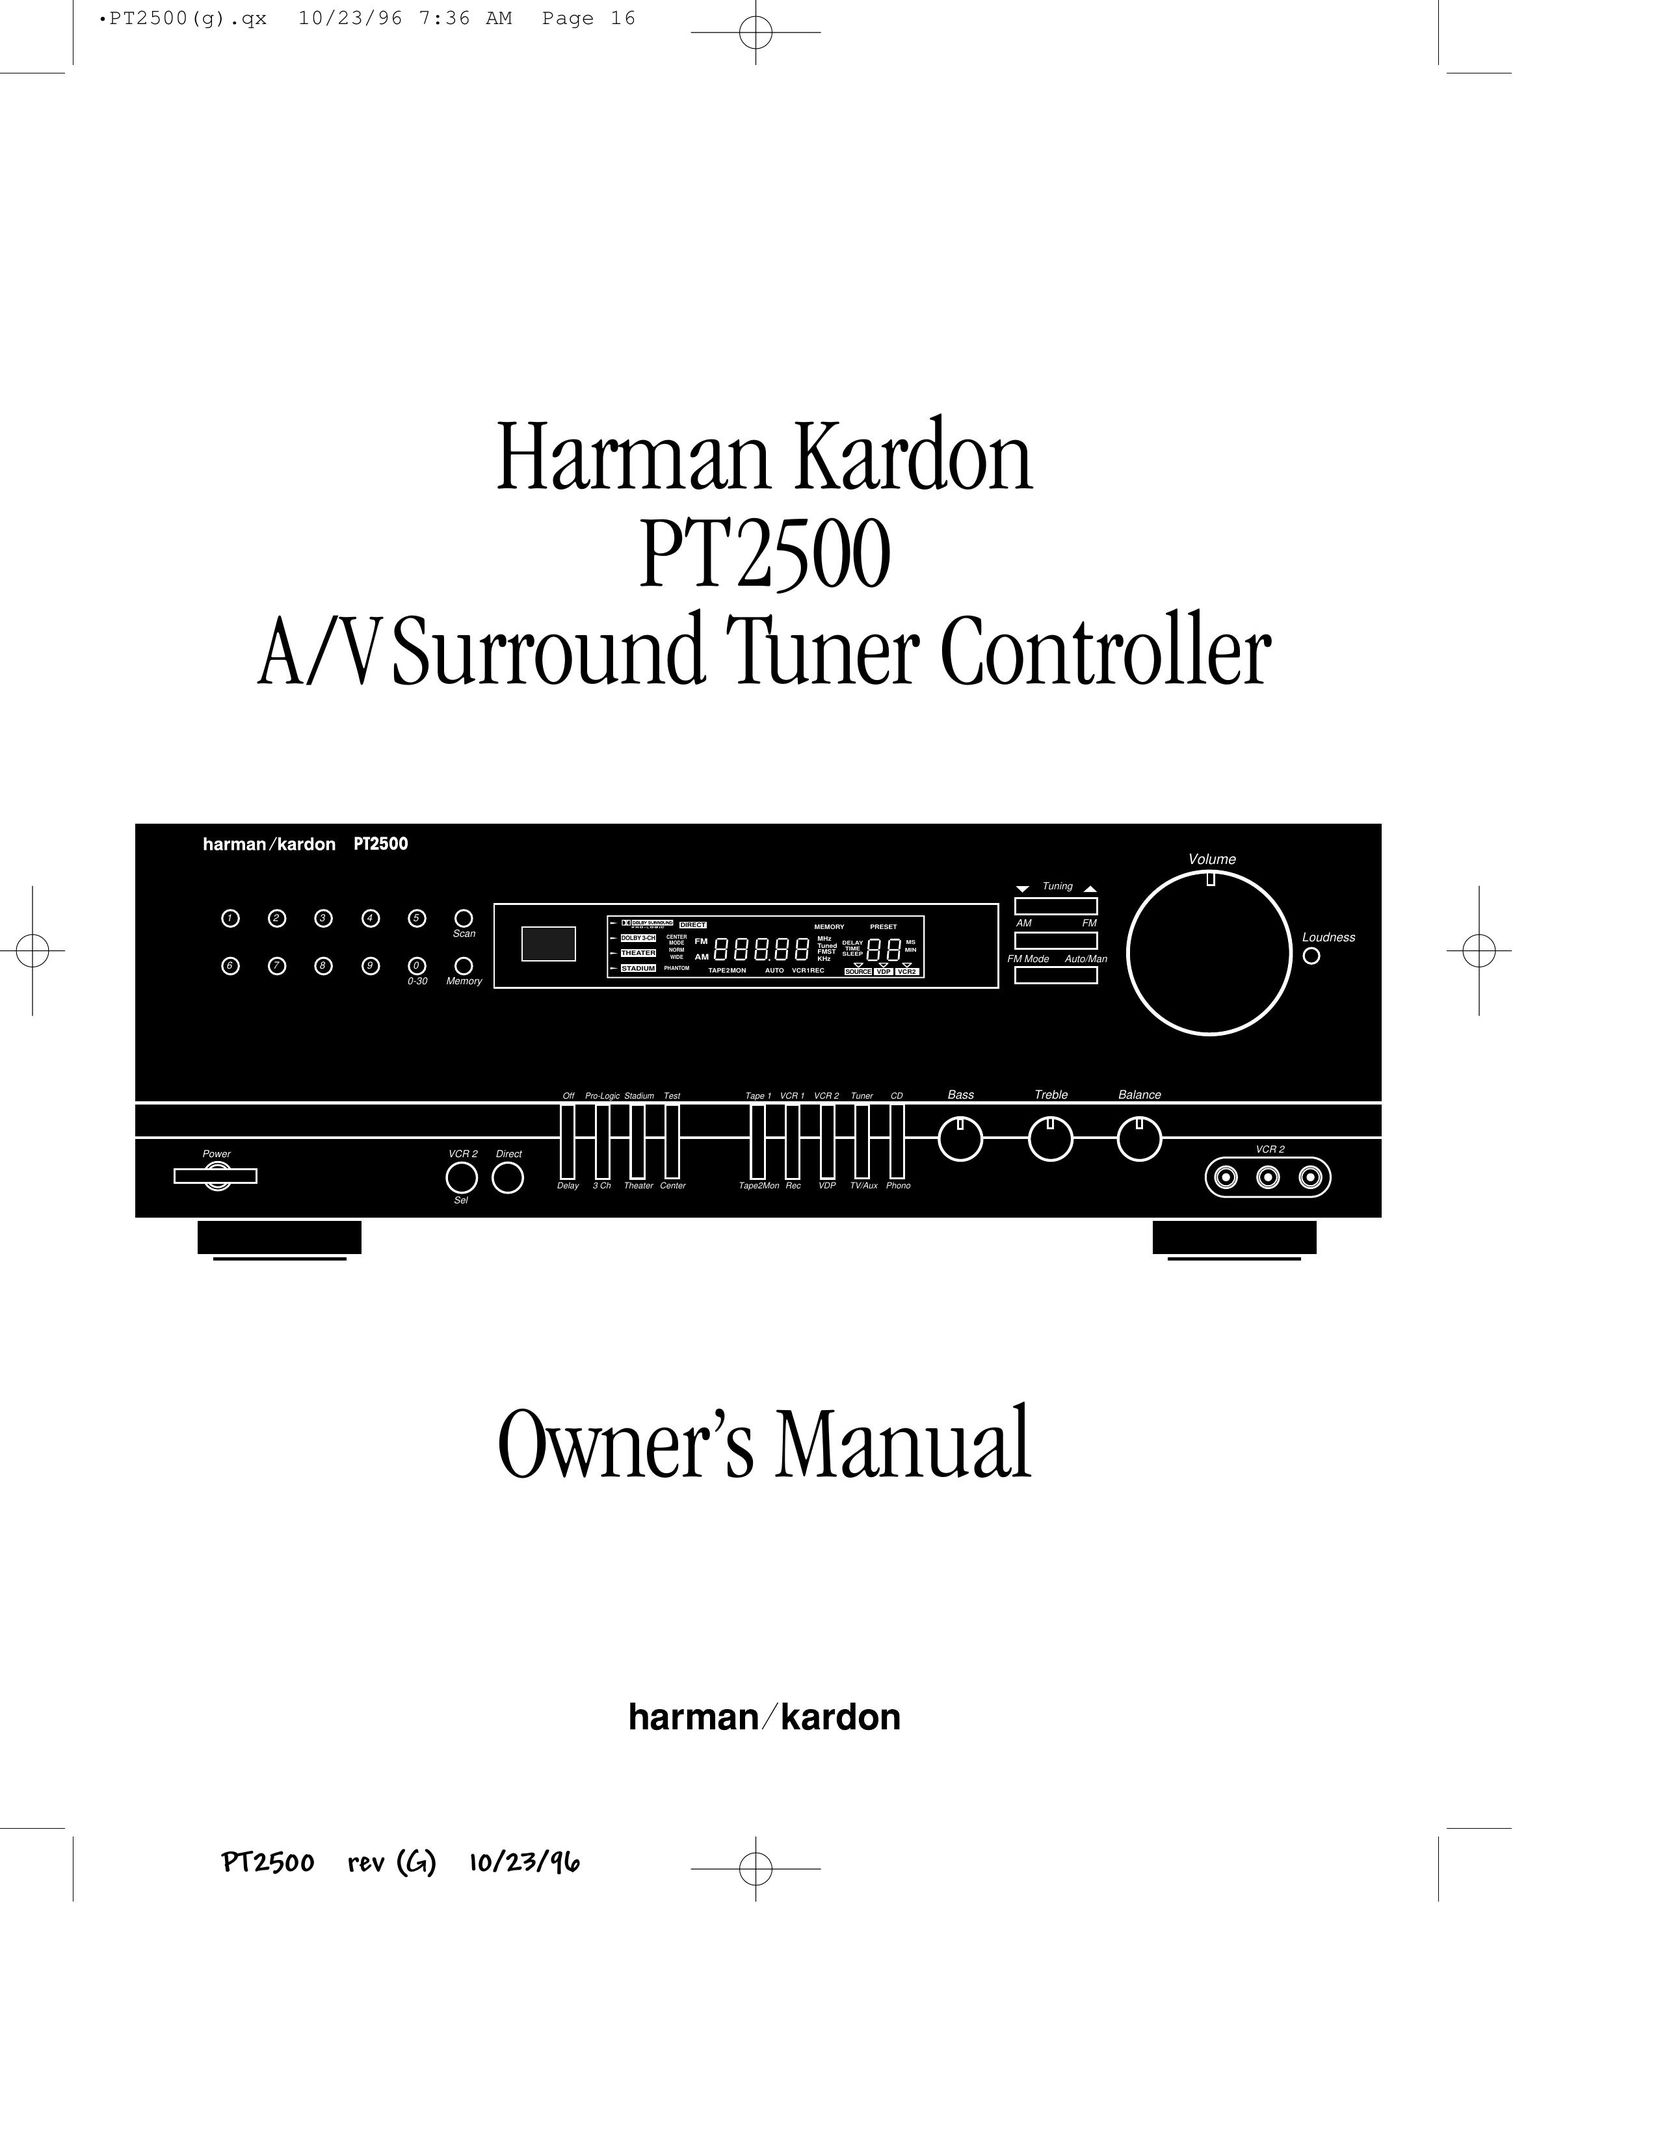 Harman-Kardon PT2500 Home Theater System User Manual